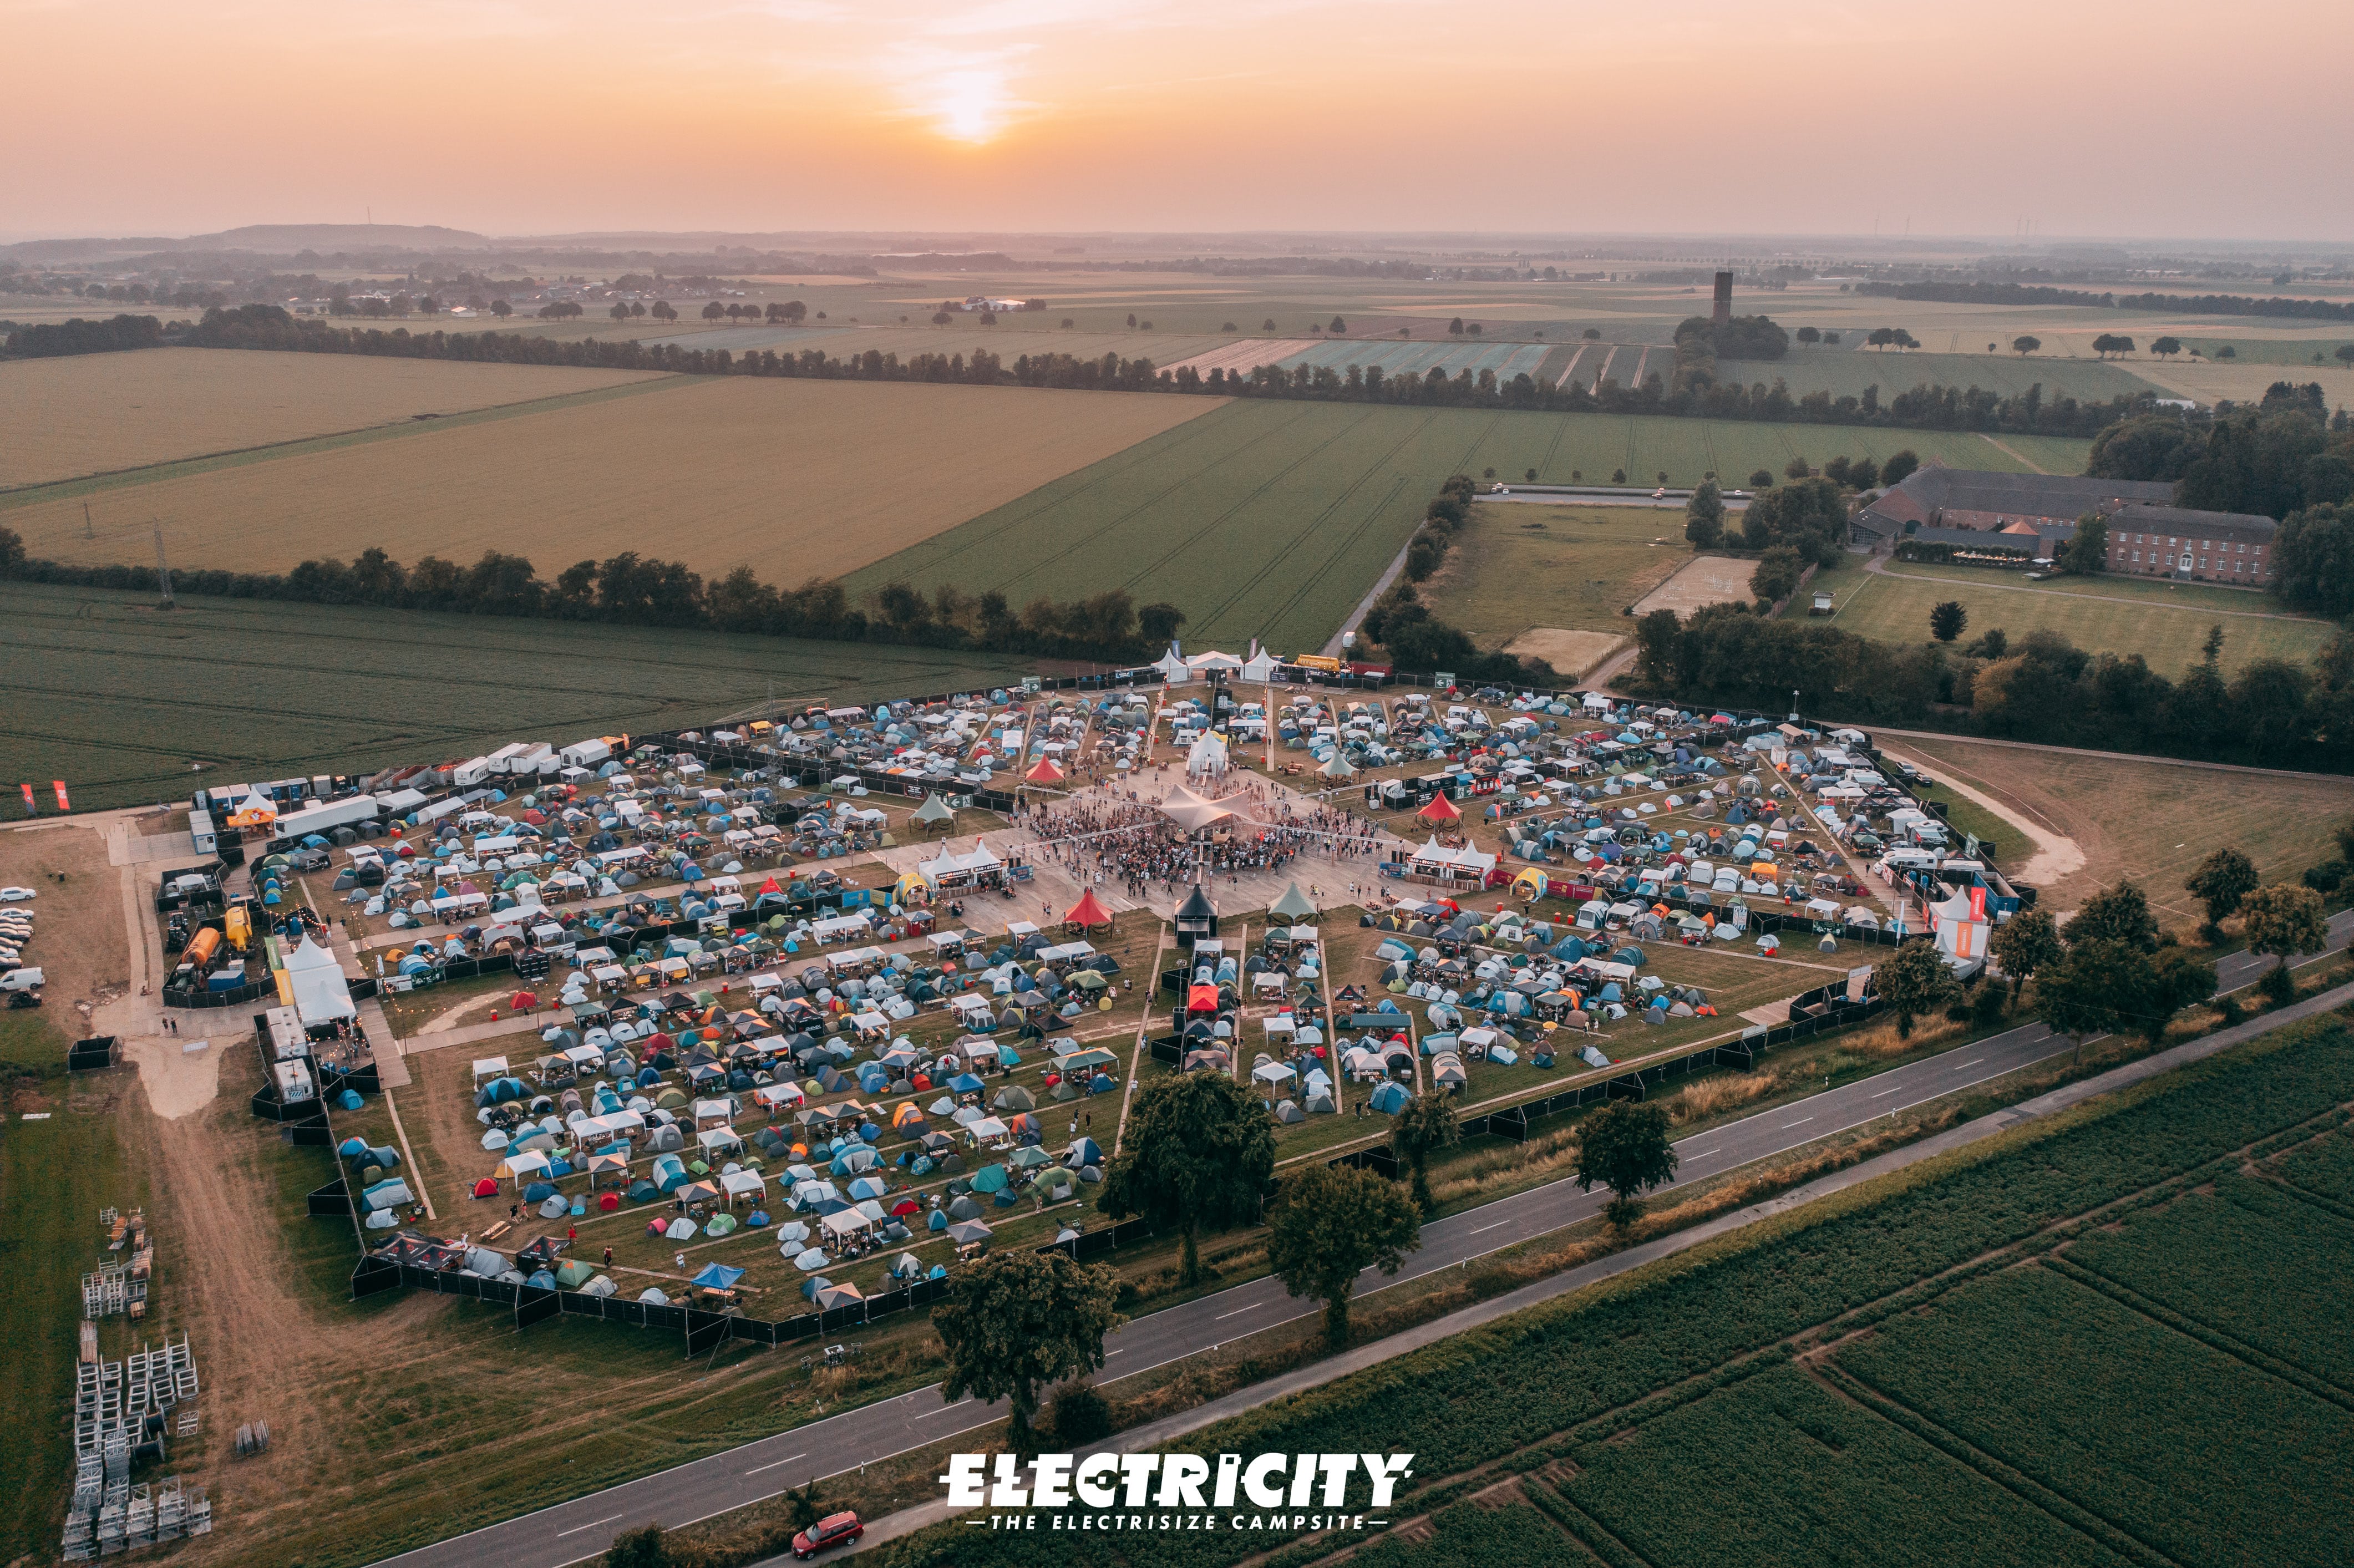 Erkelenz: Electricity Campsite 2022: Diese DJs eröffnen die Festivalsaison